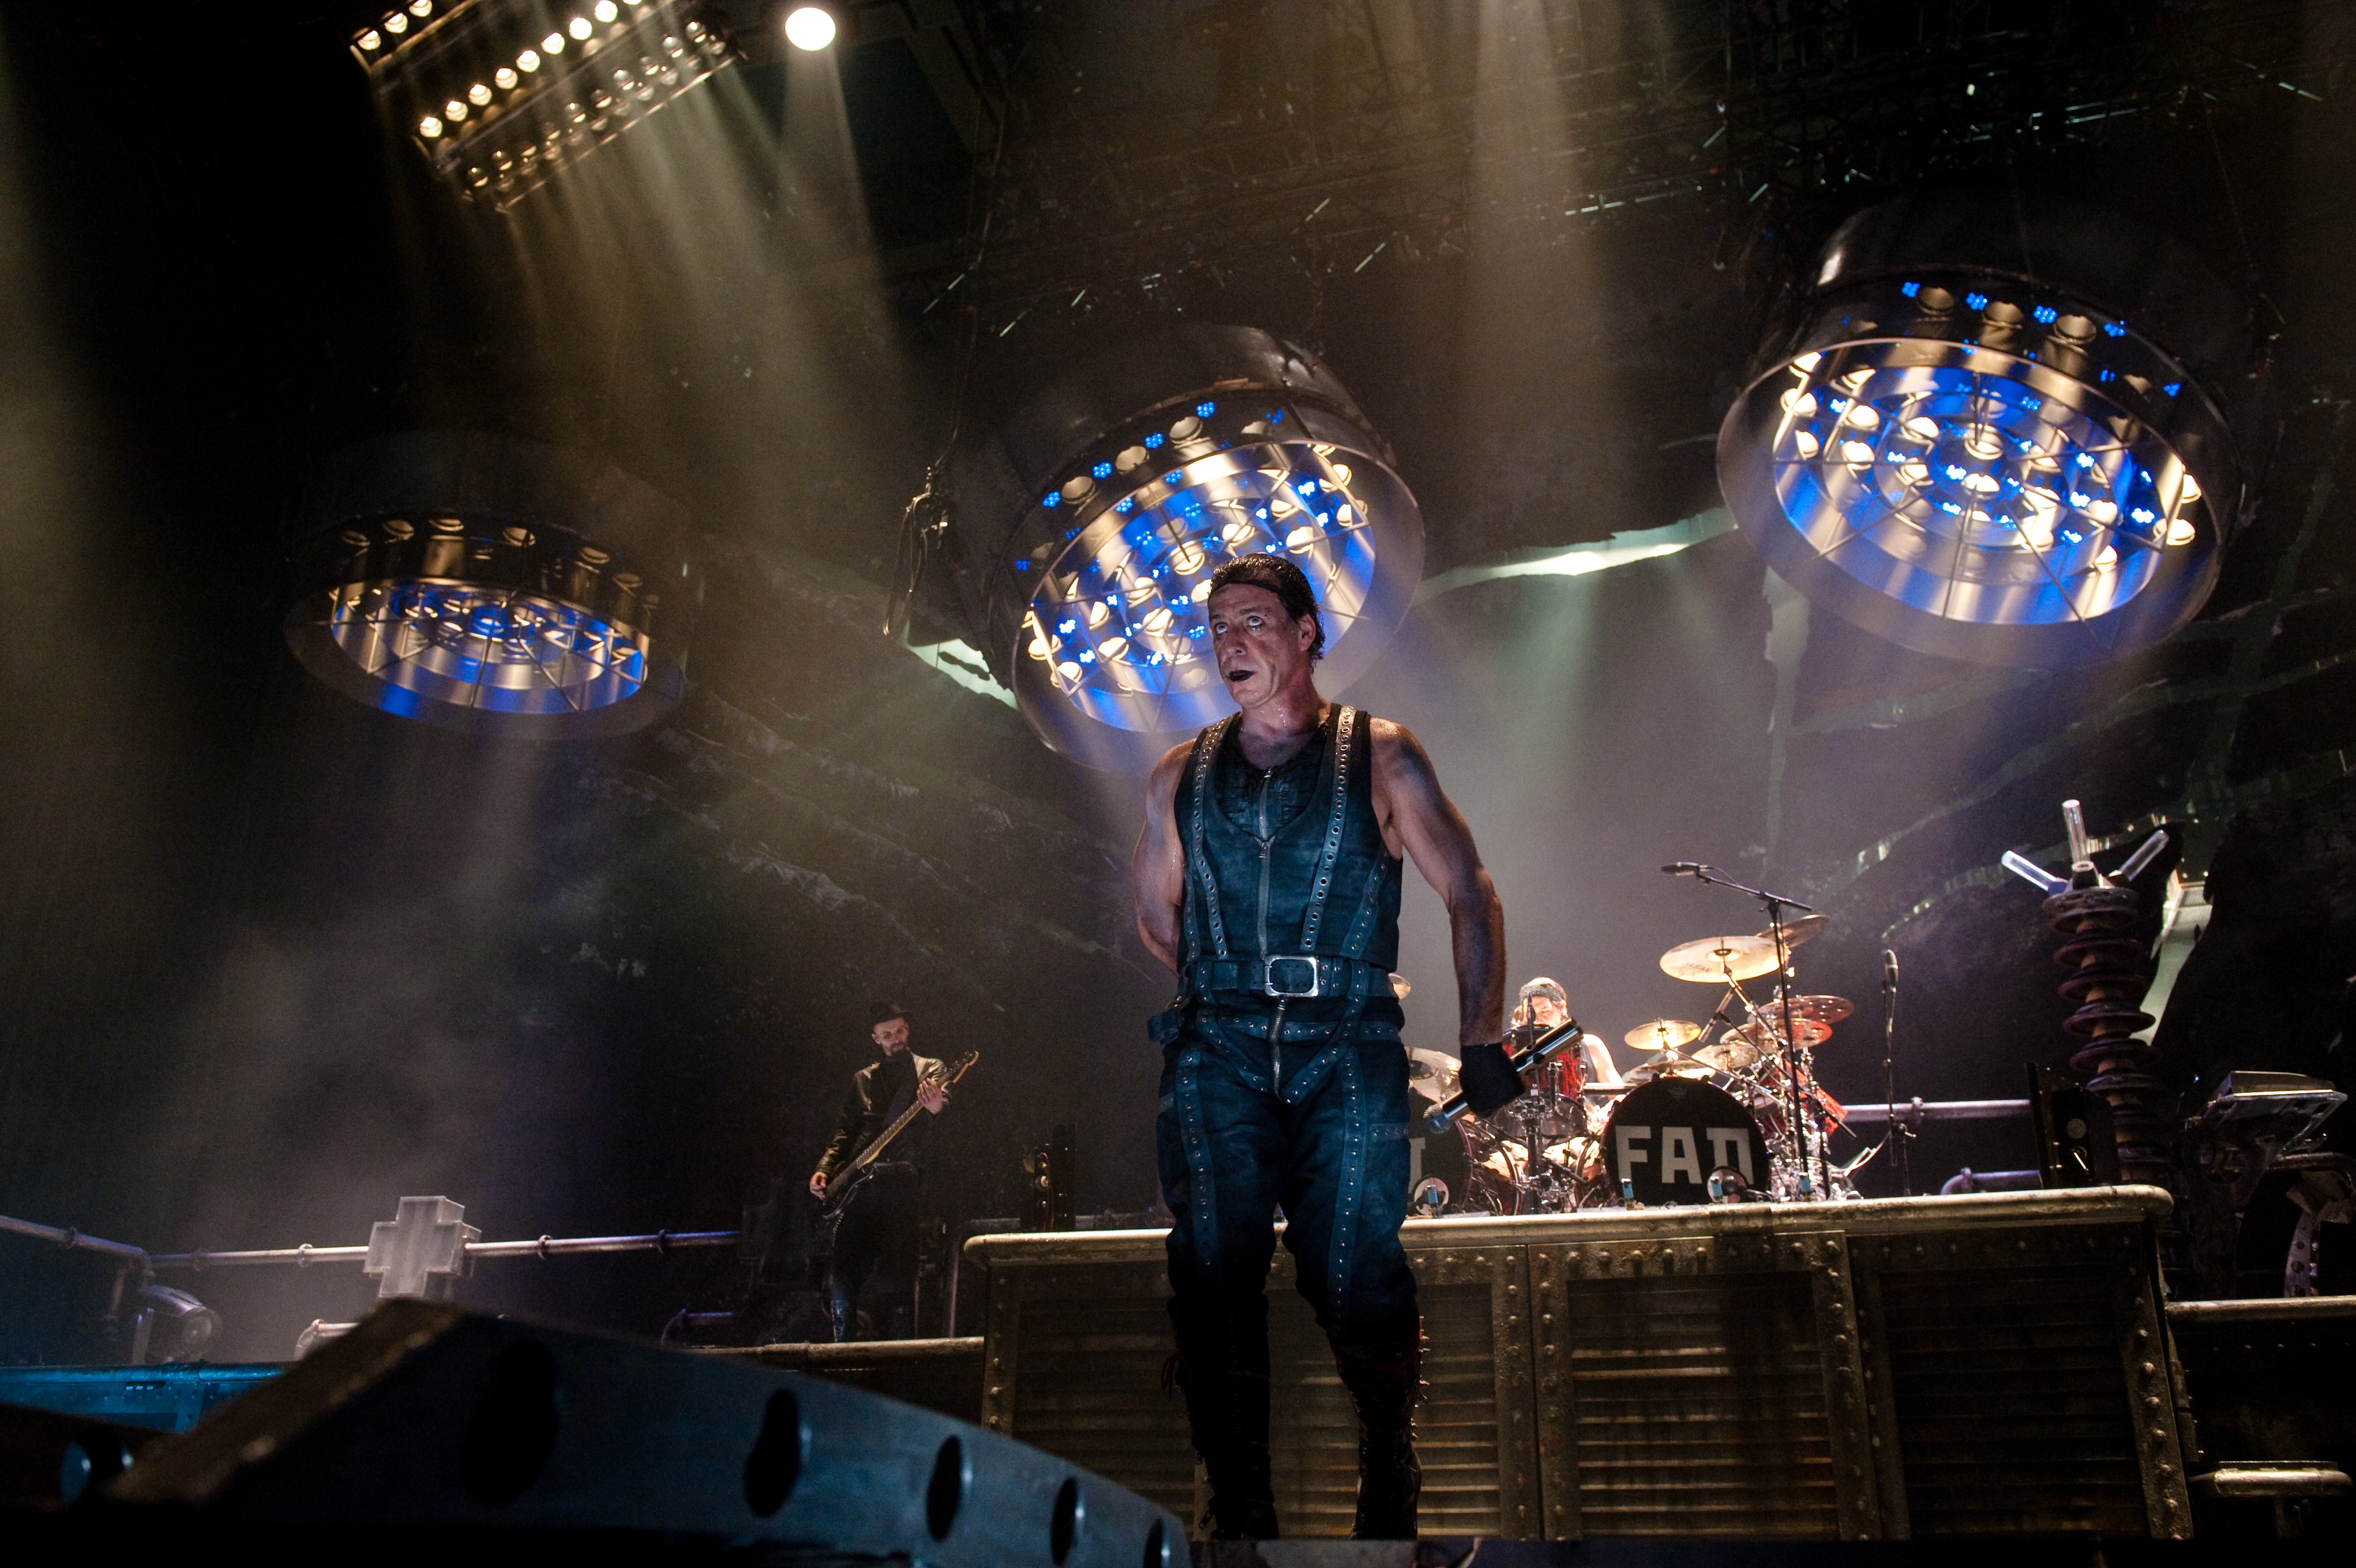 Бесплатные концерты рамштайн. Rammstein 2010. Рамштайн концерт. Сцена Rammstein 2010 фонари.